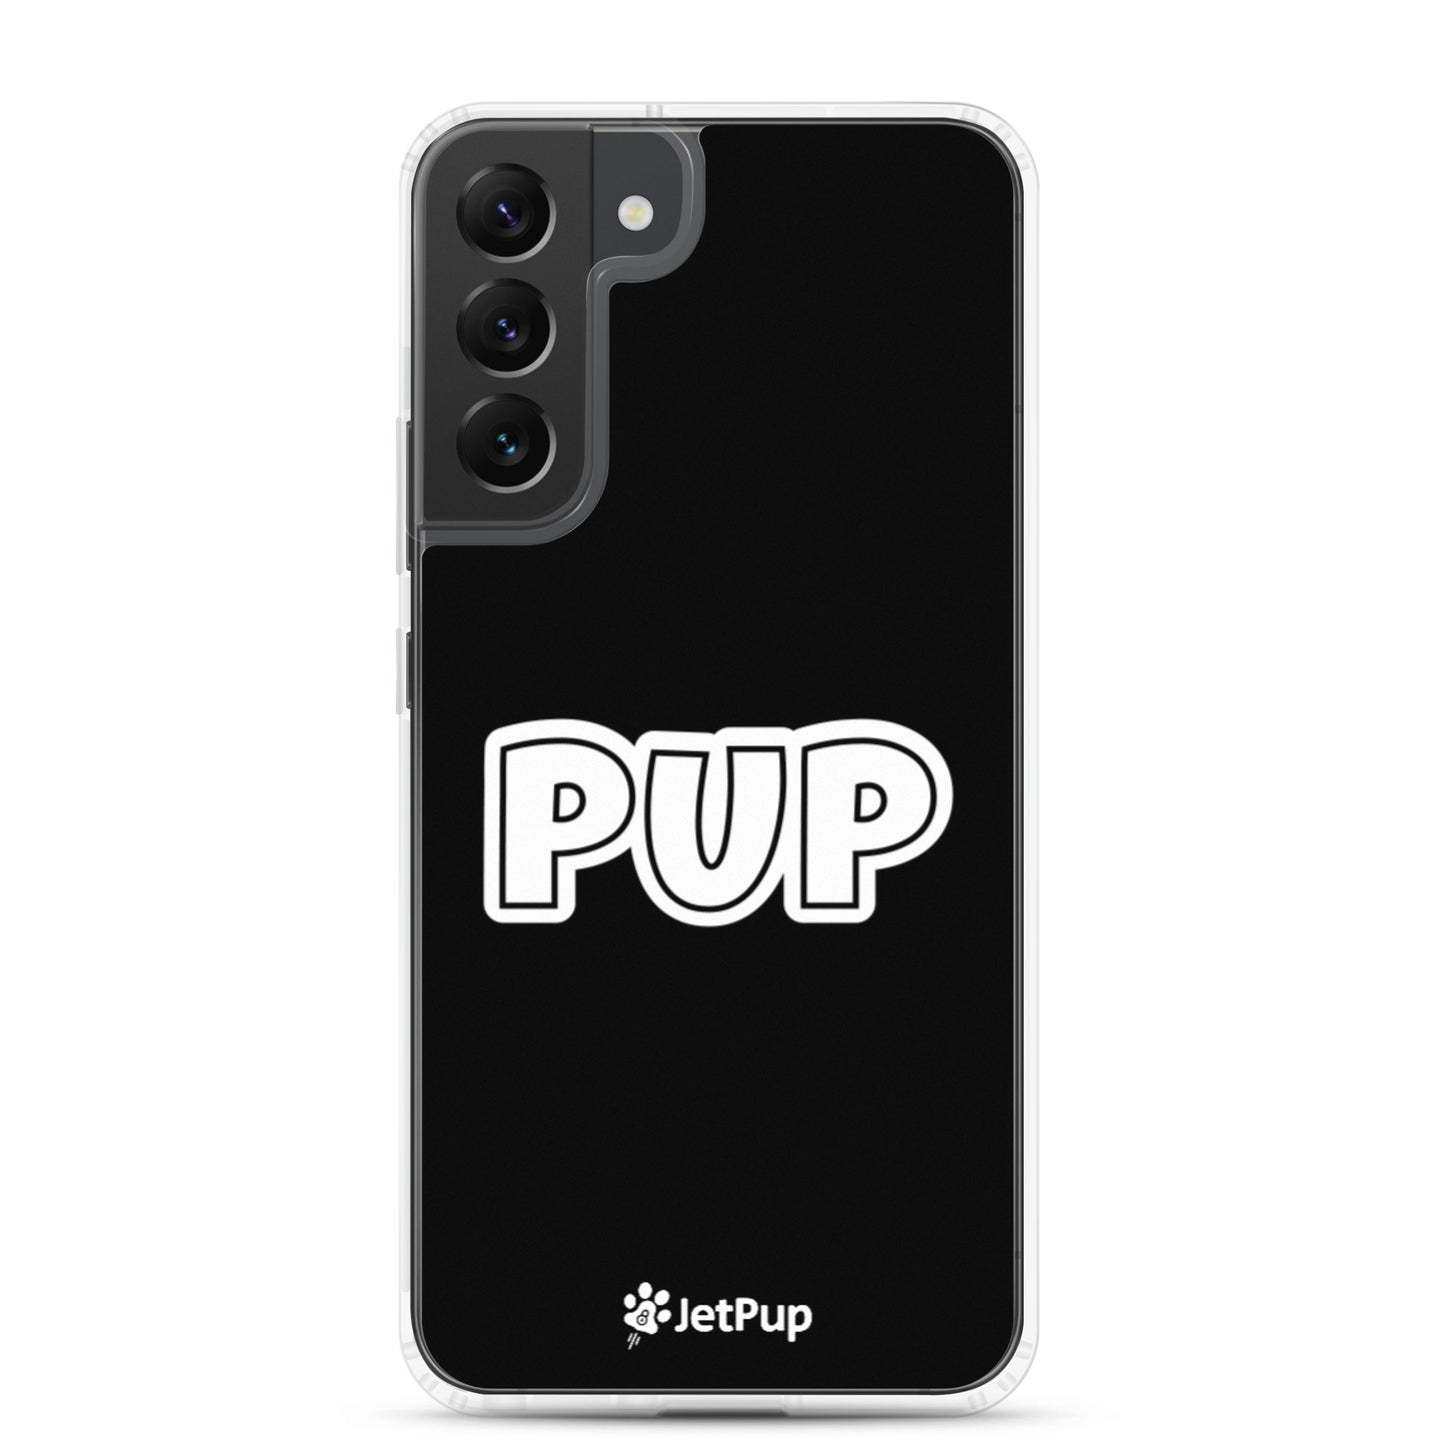 Pup Samsung Case - Black